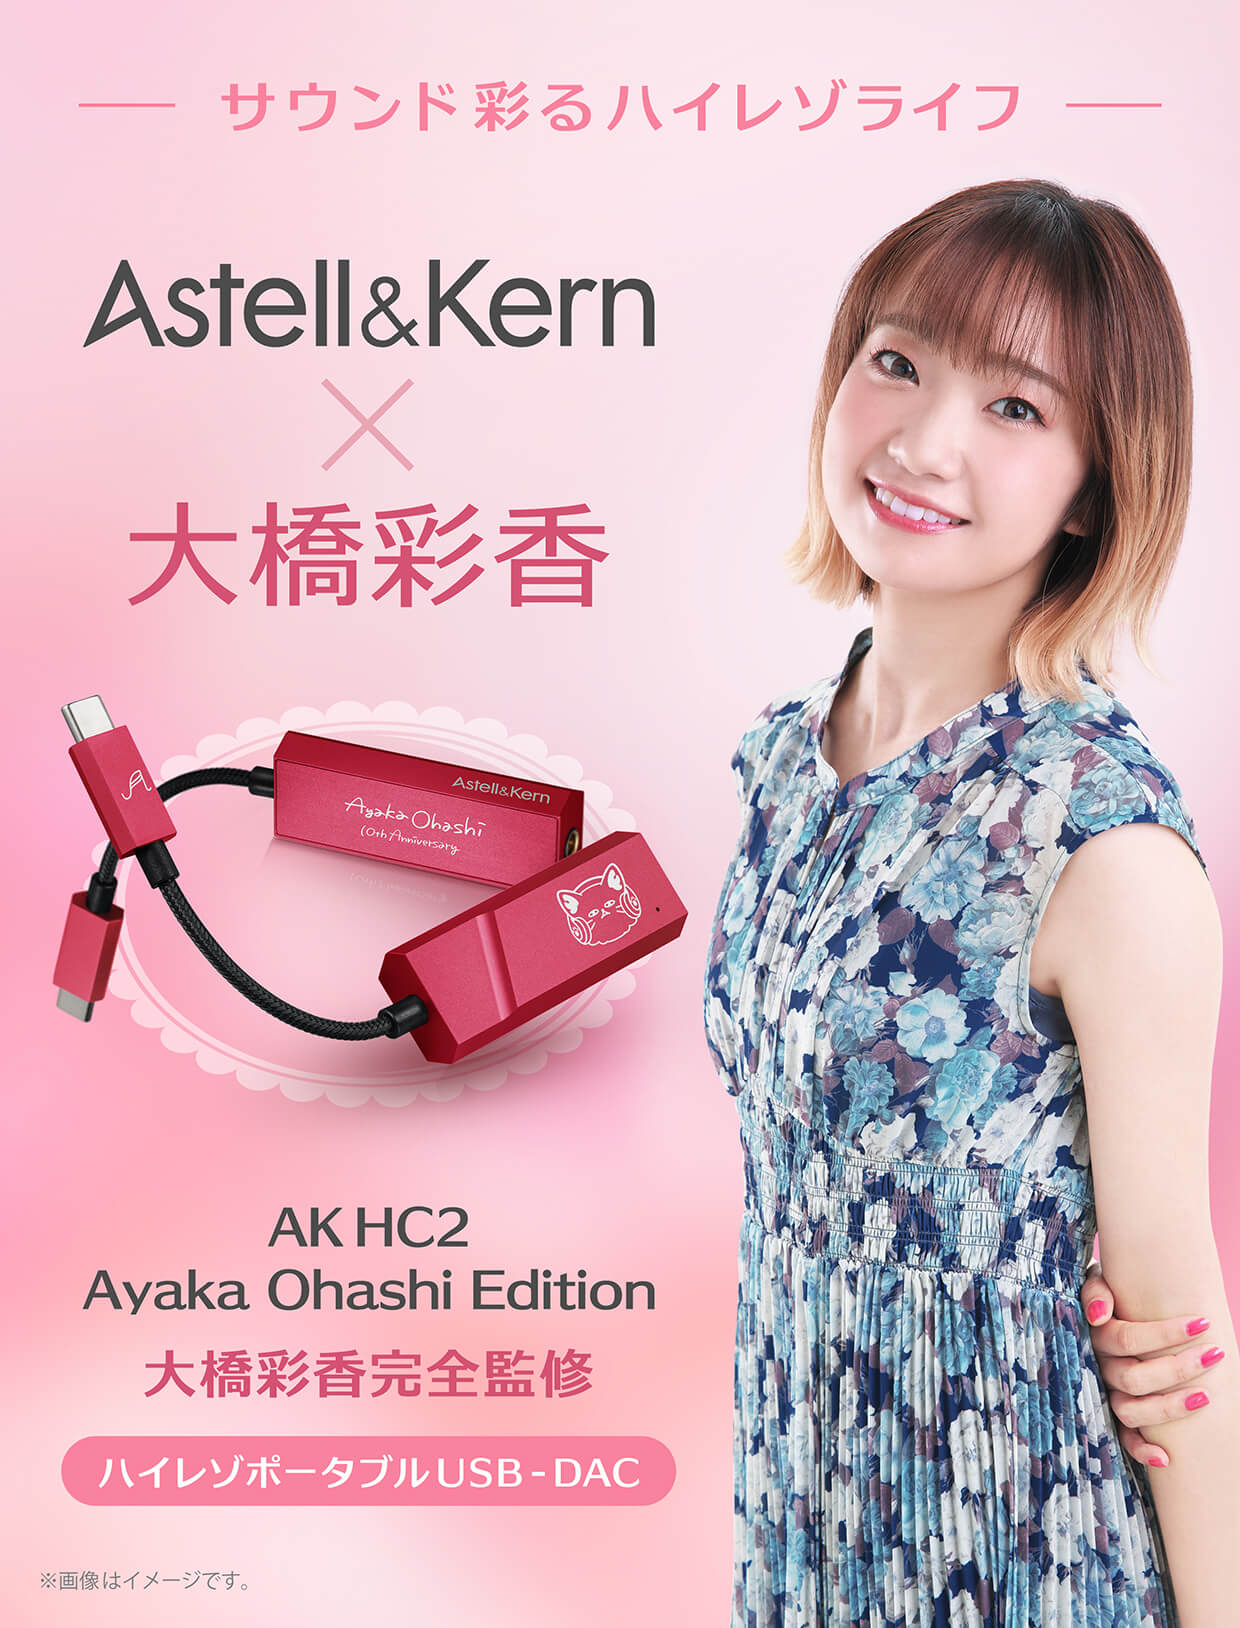 Astell&Kernx大橋彩香 -サウンド彩るハイレゾライフ- AK HC2 Ayaka Ohashi Edition